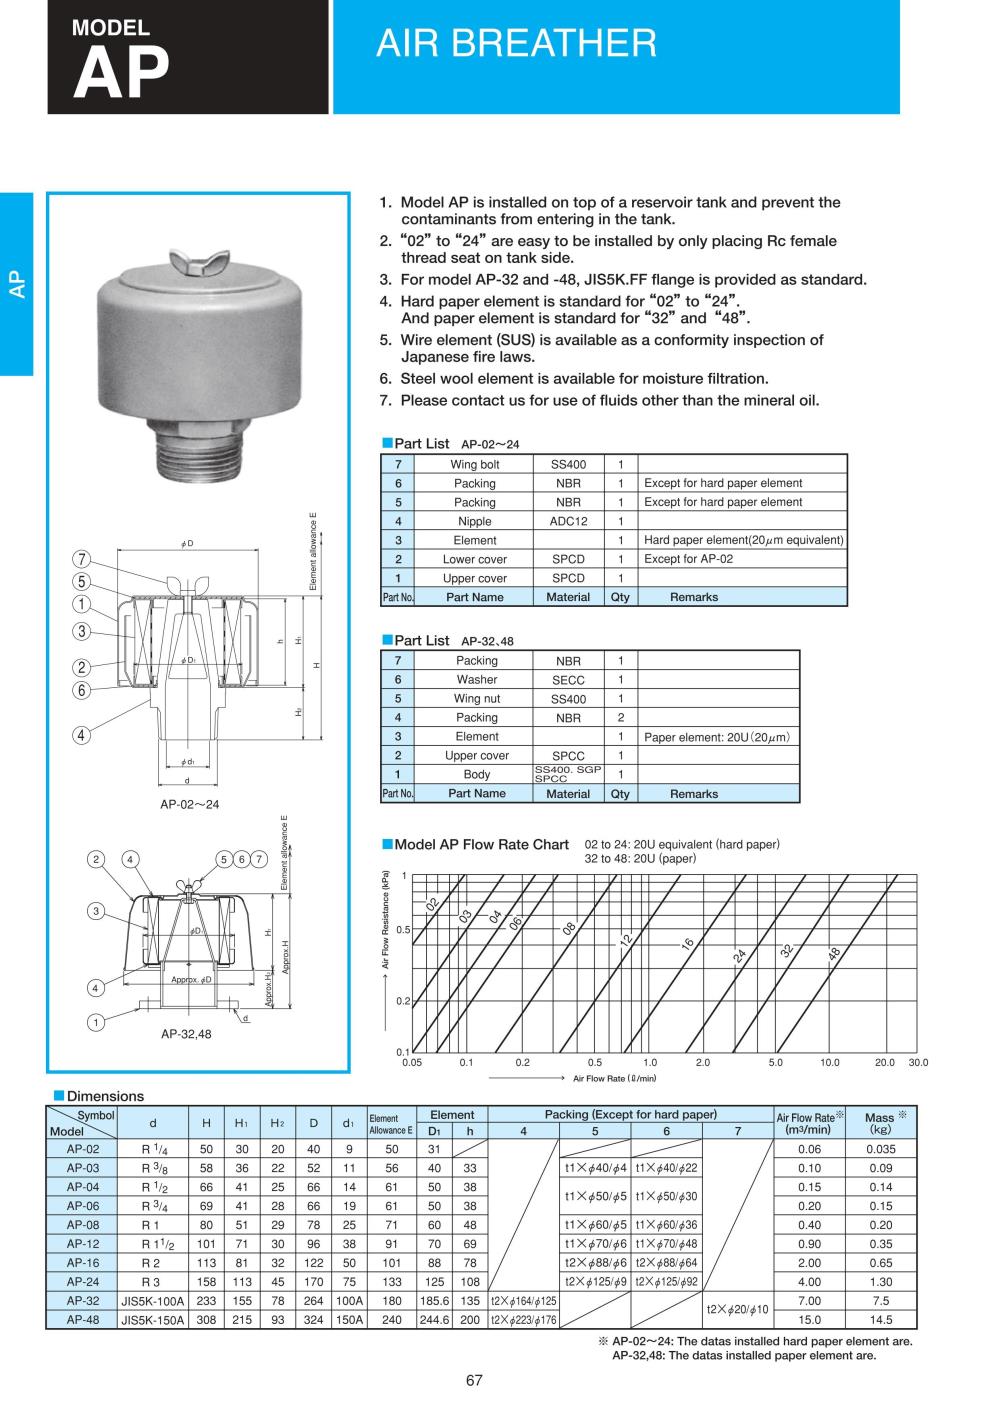 TAISEI Air Breather G-AP Series,G-AP Series, G-AP-02, G-AP-03, G-AP-04, G-AP-06, G-AP-08, G-AP-12, G-AP-16, G-AP-24, G-AP-32, G-AP-48, TAISEI, TAISEI KOGYO, Air Breather,TAISEI,Machinery and Process Equipment/Breathers